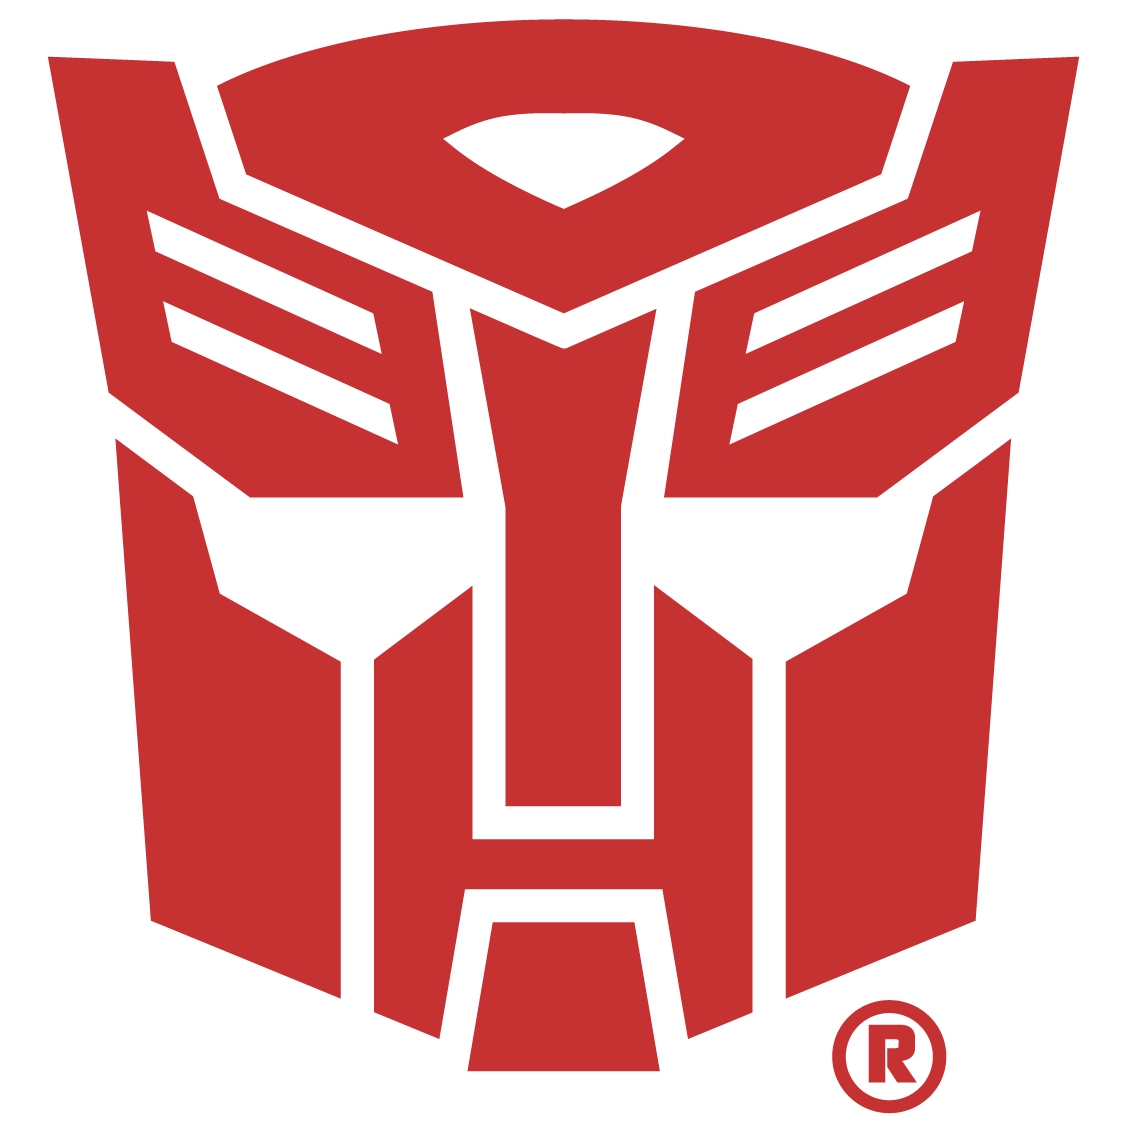 Transformers autobots logo clipart - ClipartFox